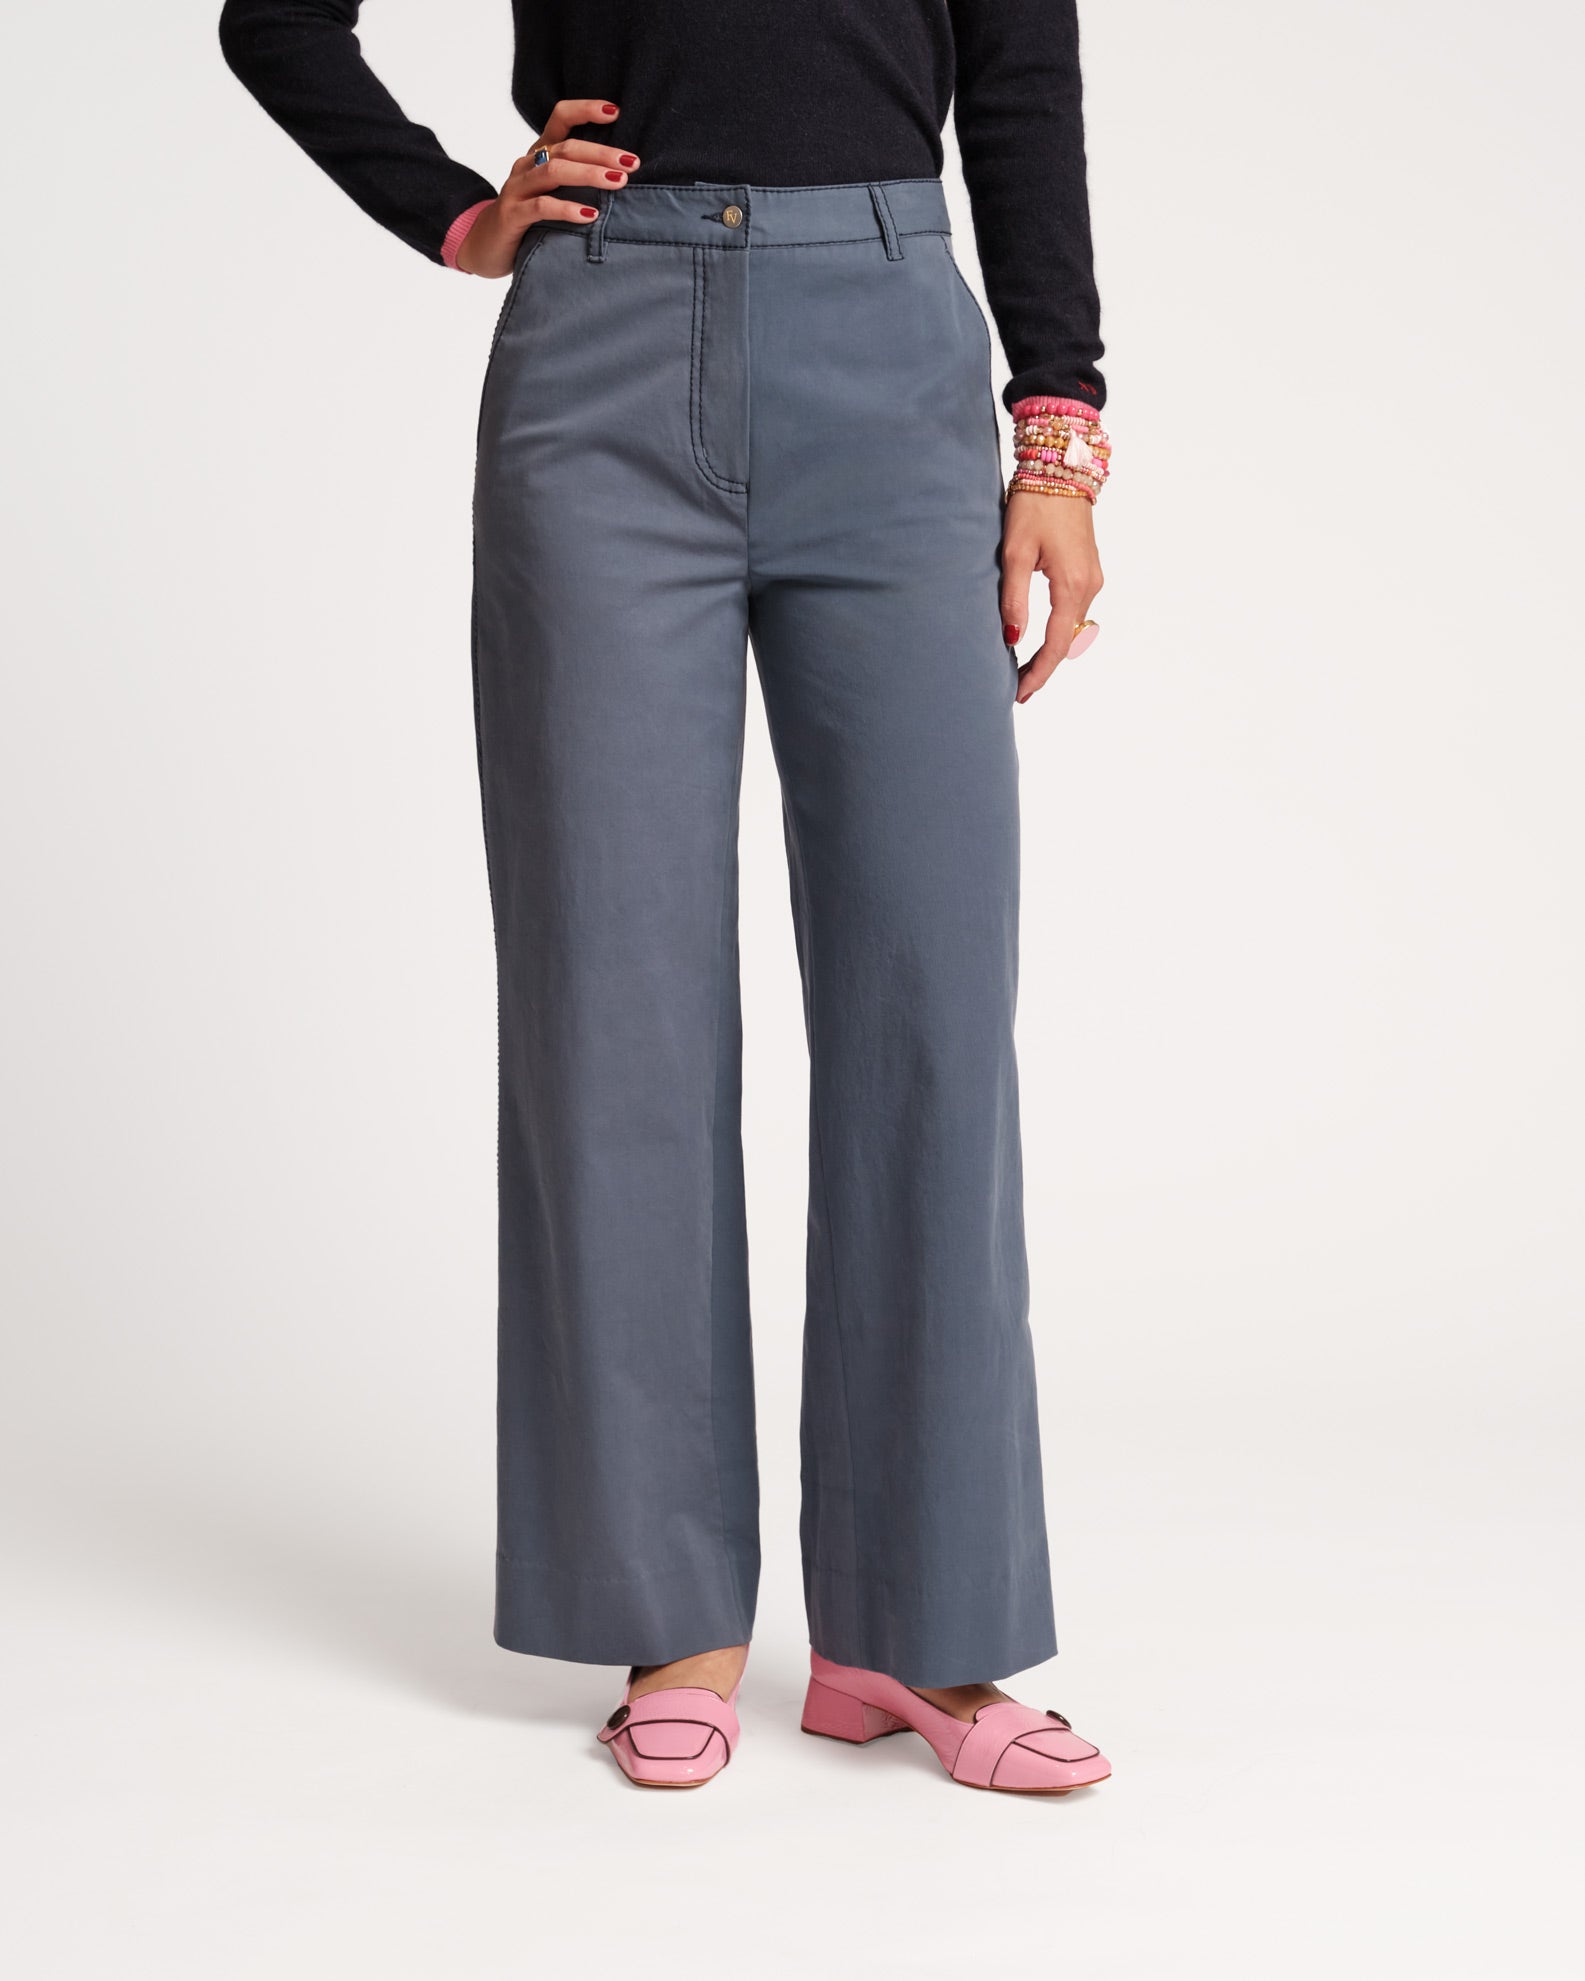 Stylish & Classic Pants | Frances Valentine